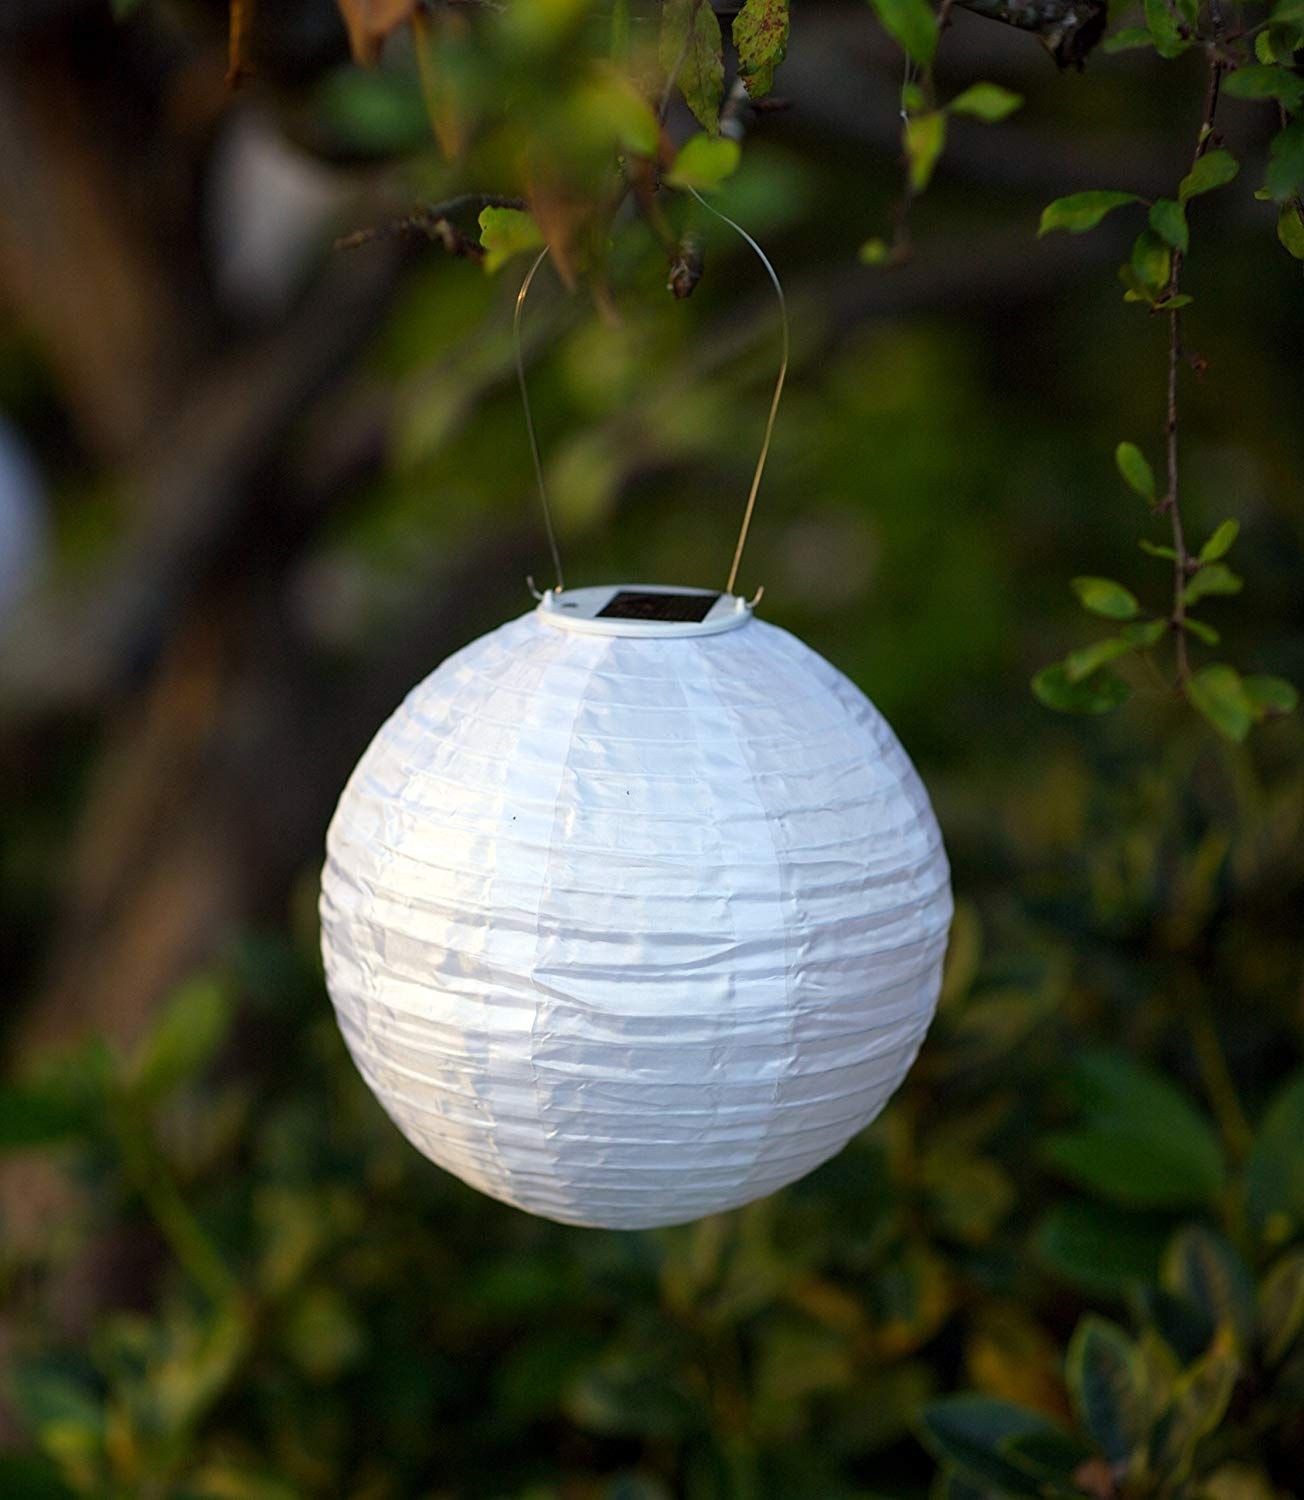 Amazon : Allsop Home And Garden Soji Original 10" Round Led Inside Outdoor Lanterns At Amazon (View 13 of 20)